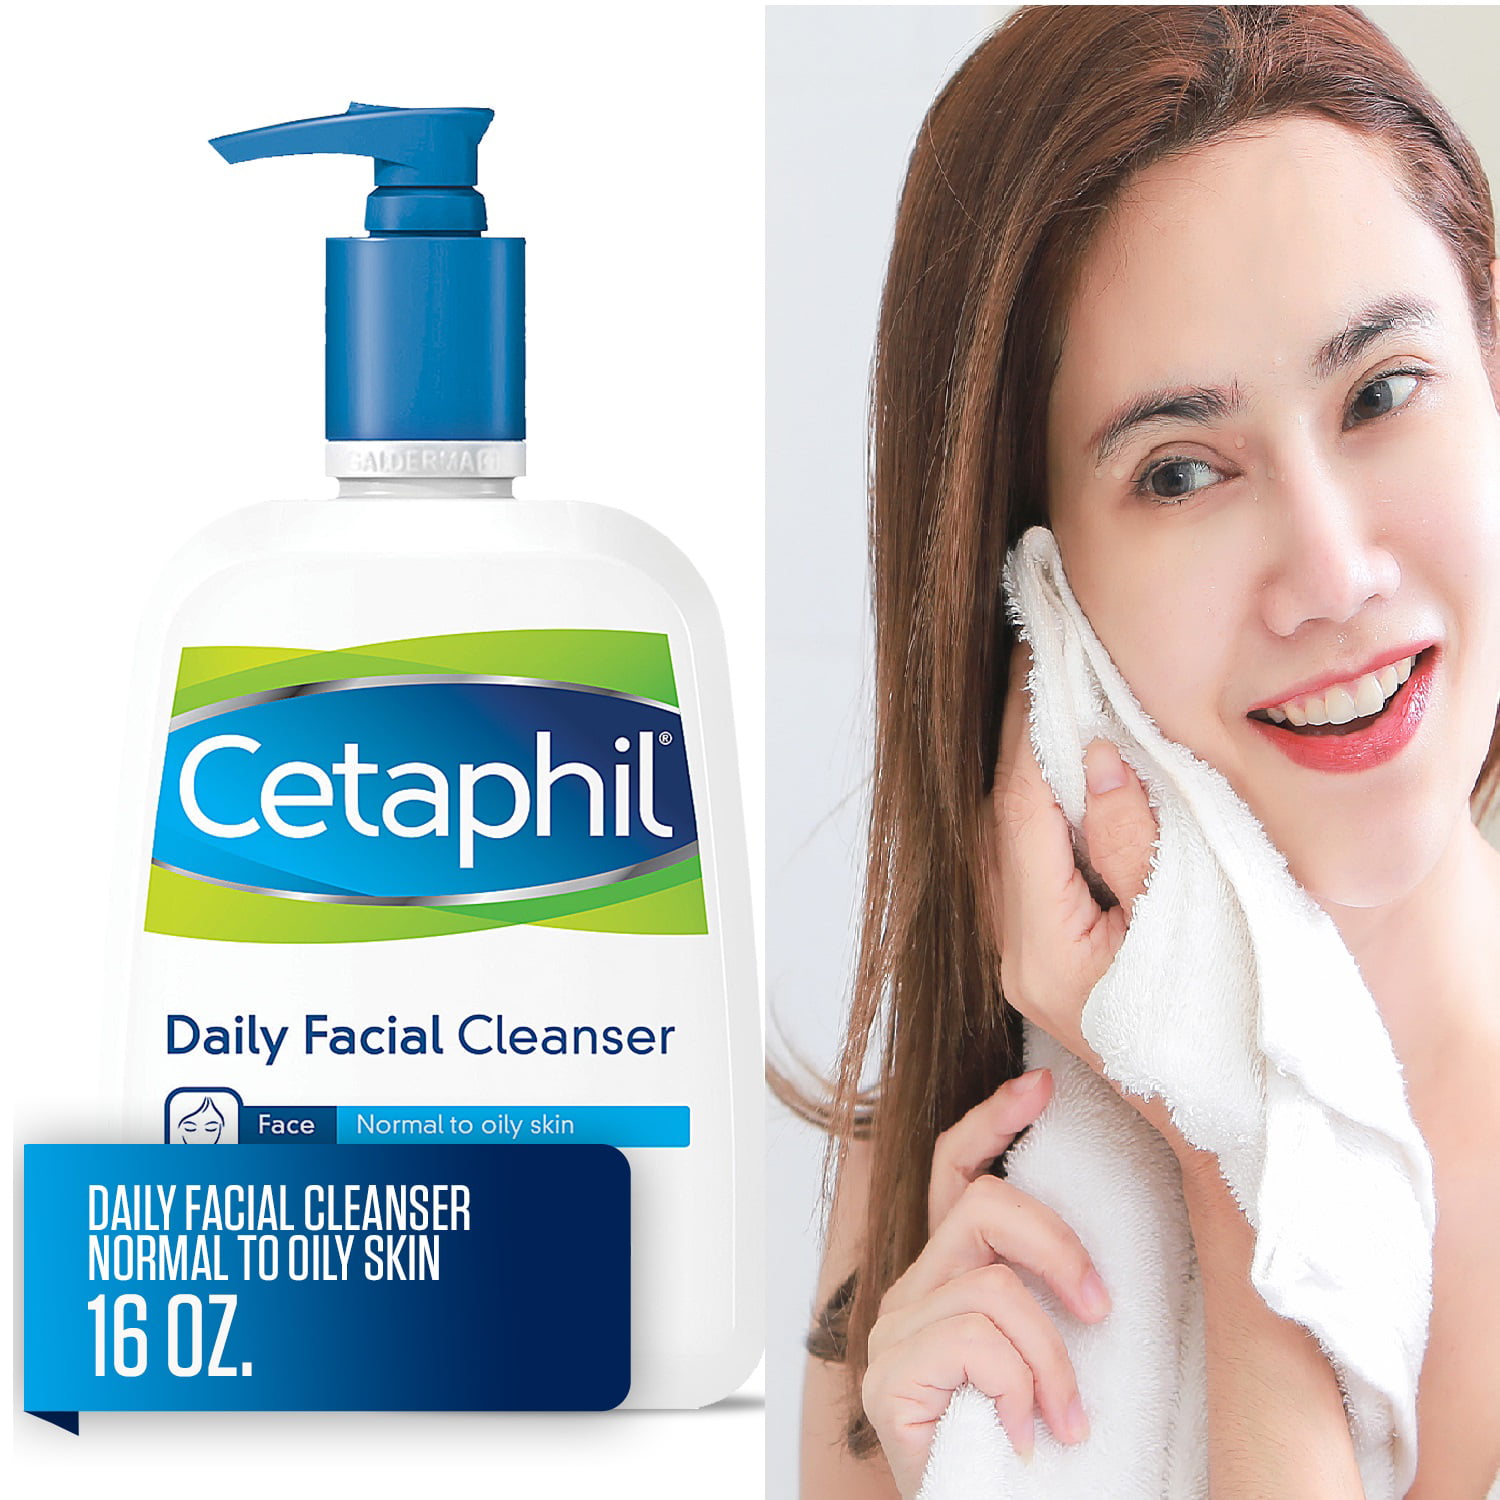 Best facial cleanser for sensitive skin